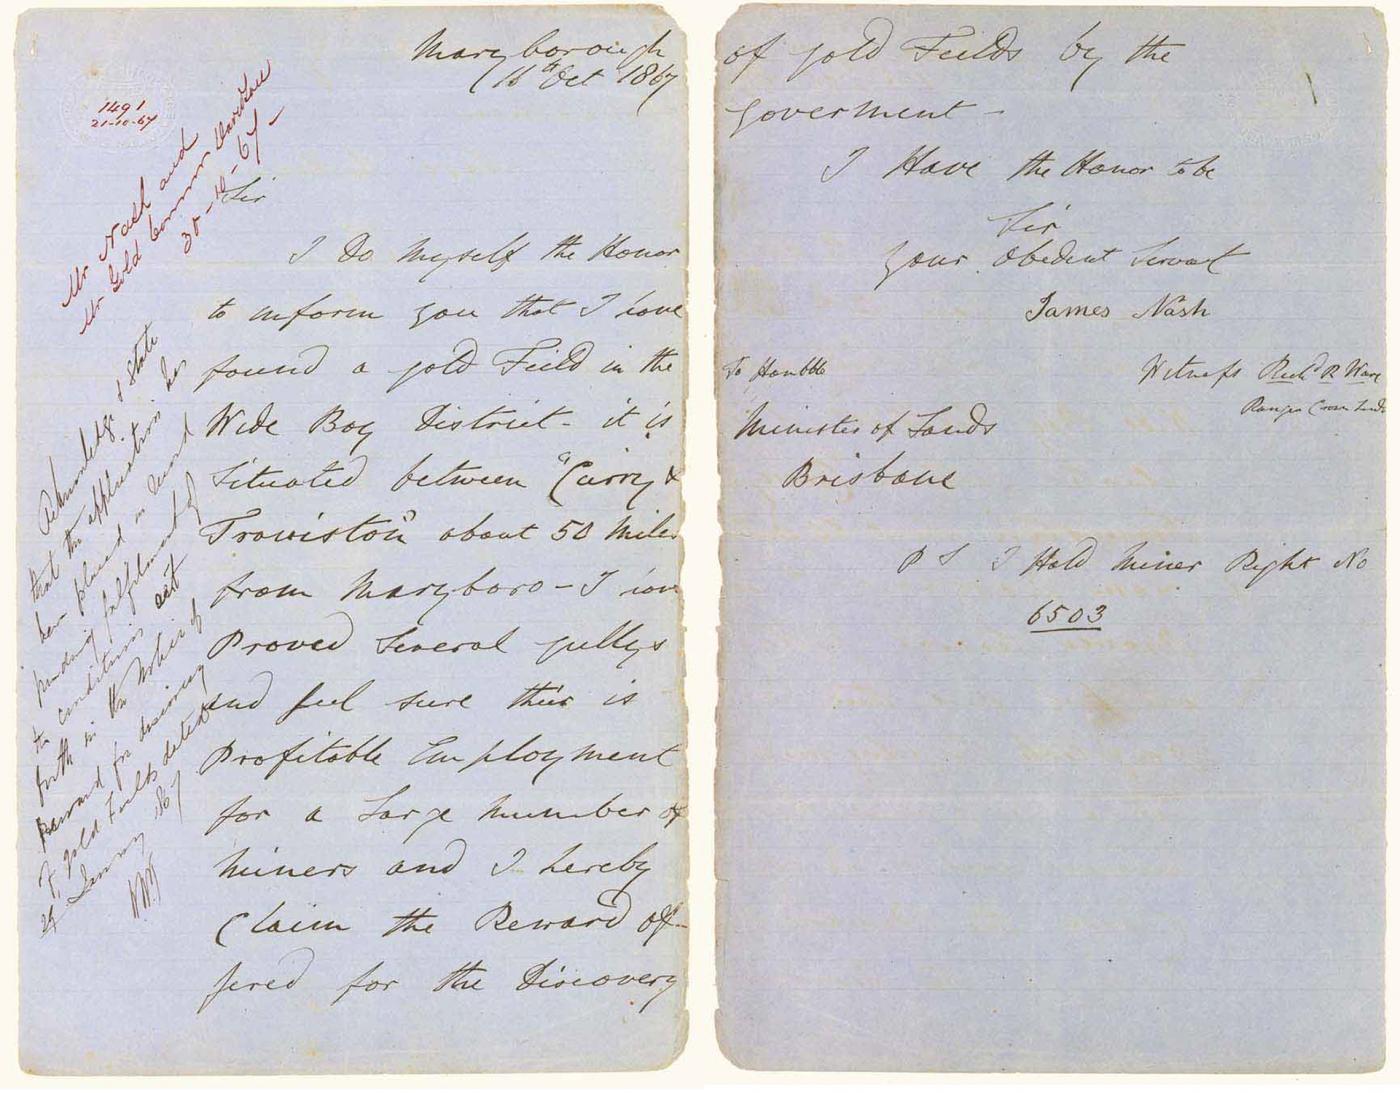 James Nash's letter regarding gold at Gympie, 1867